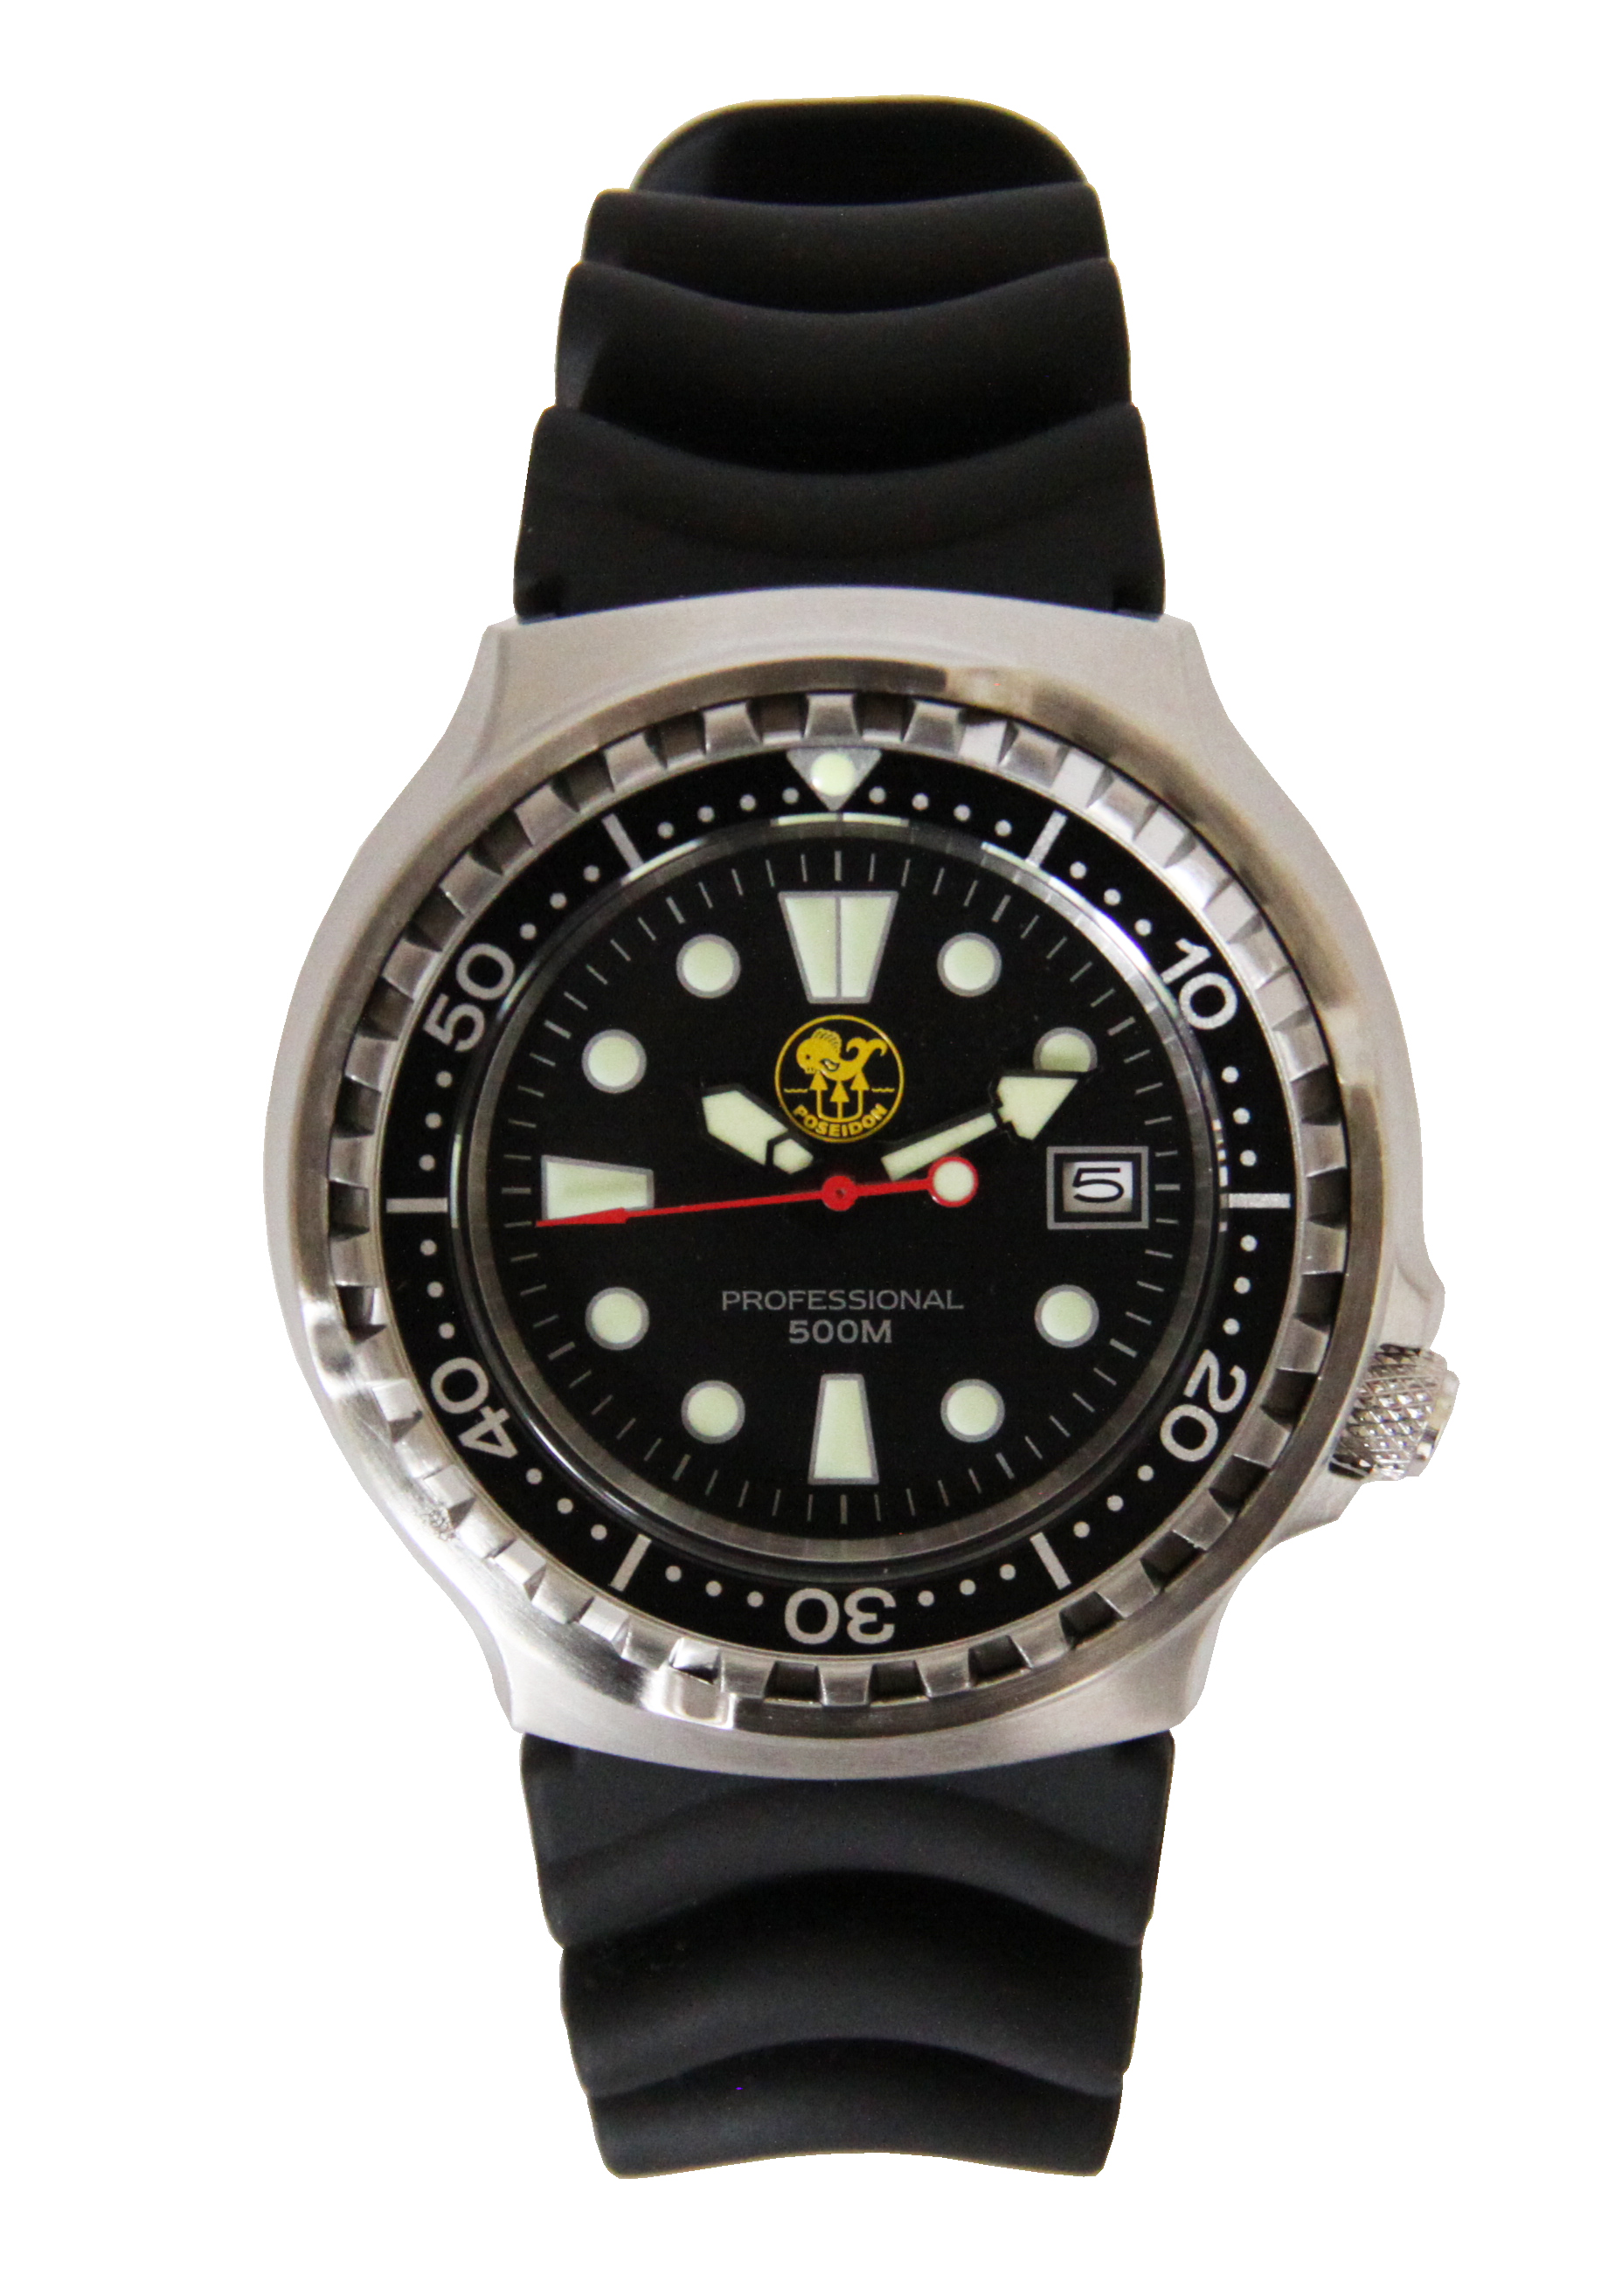 Dive Watch Professional 500m, BK